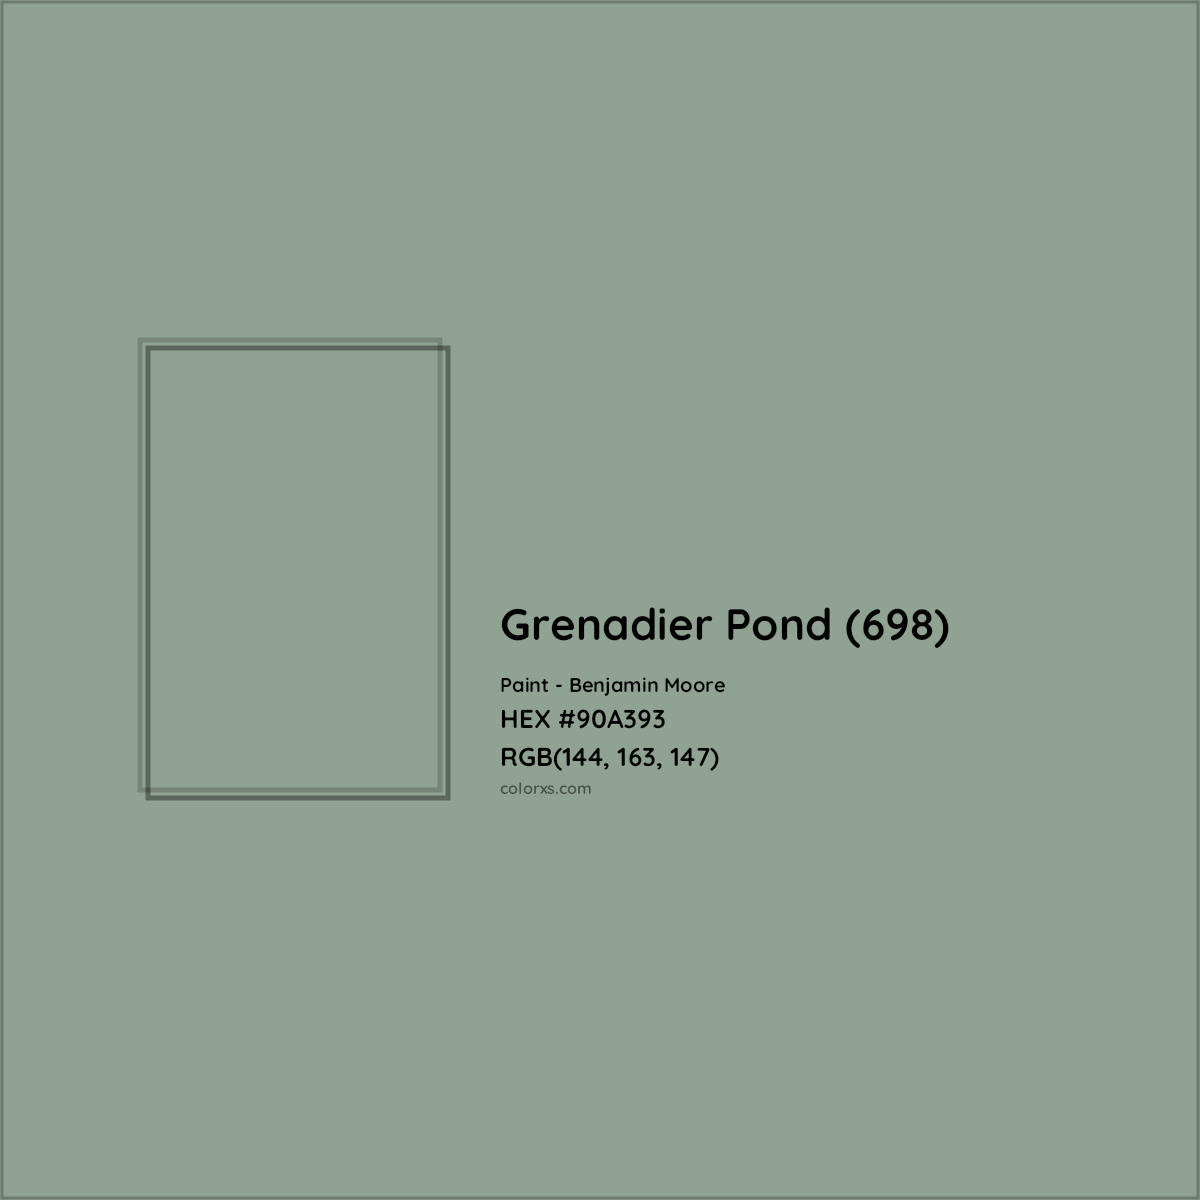 HEX #90A393 Grenadier Pond (698) Paint Benjamin Moore - Color Code